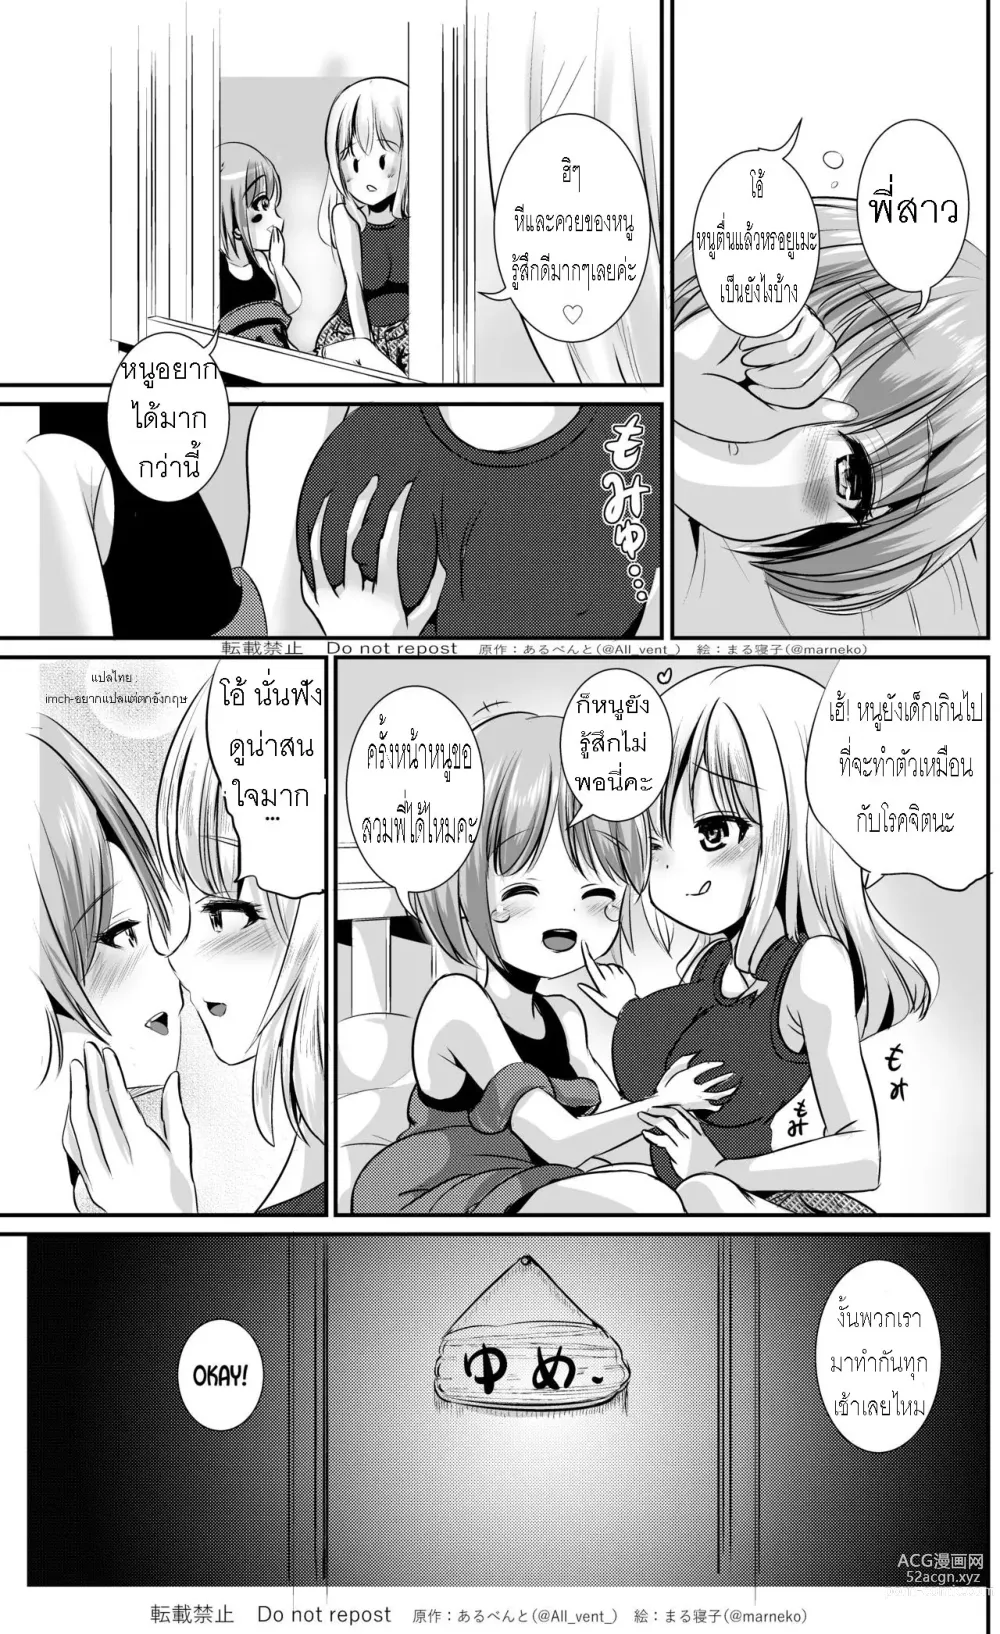 Page 23 of doujinshi Skin Changing Sisters แฝงร่างเป็นพี่สาว